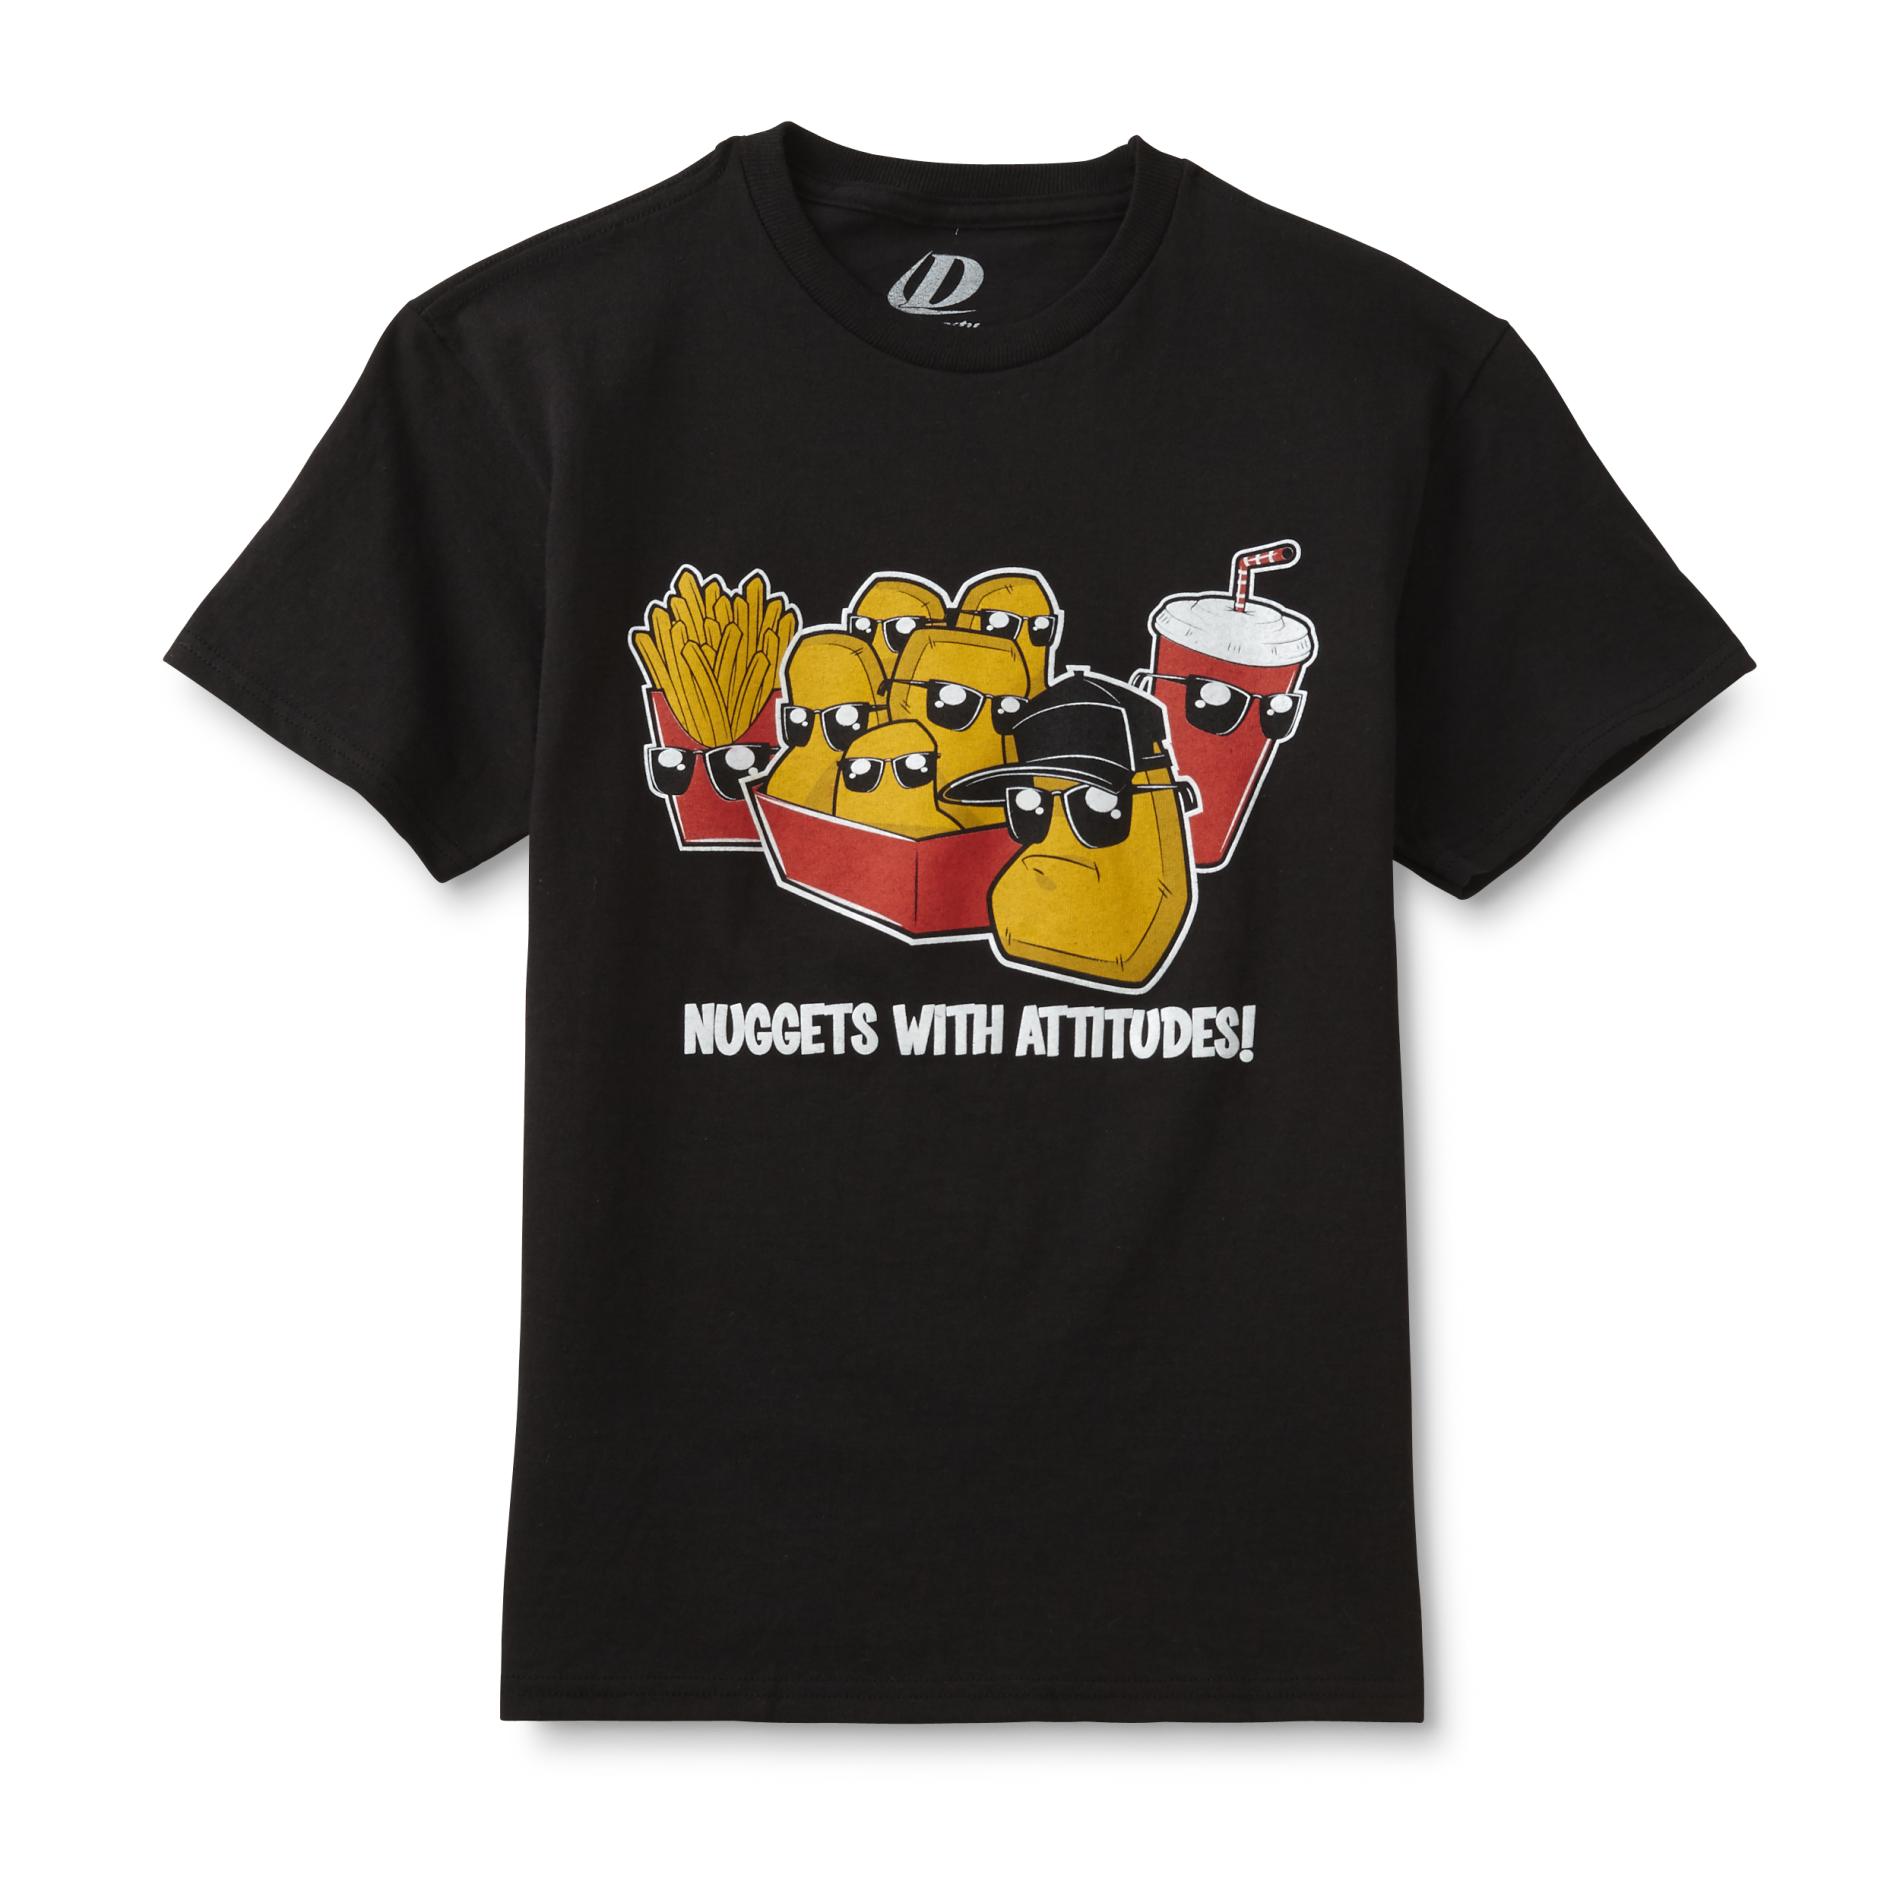 TRIMFIT Boy's Graphic T-Shirt - Nuggets